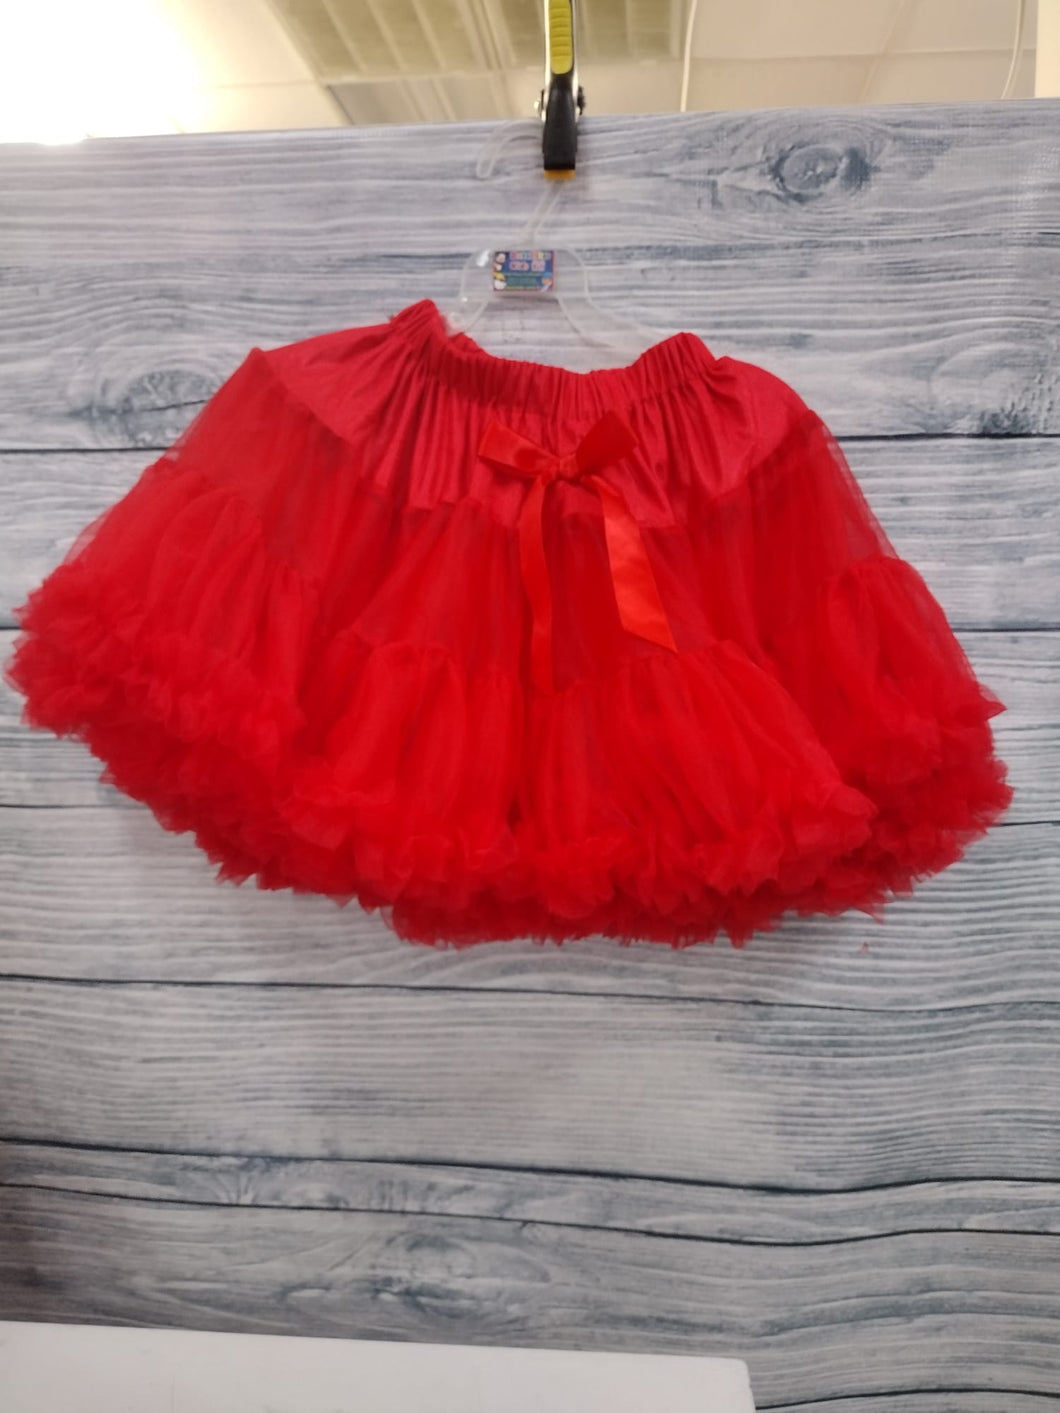 Red Petti Skirt Tutu